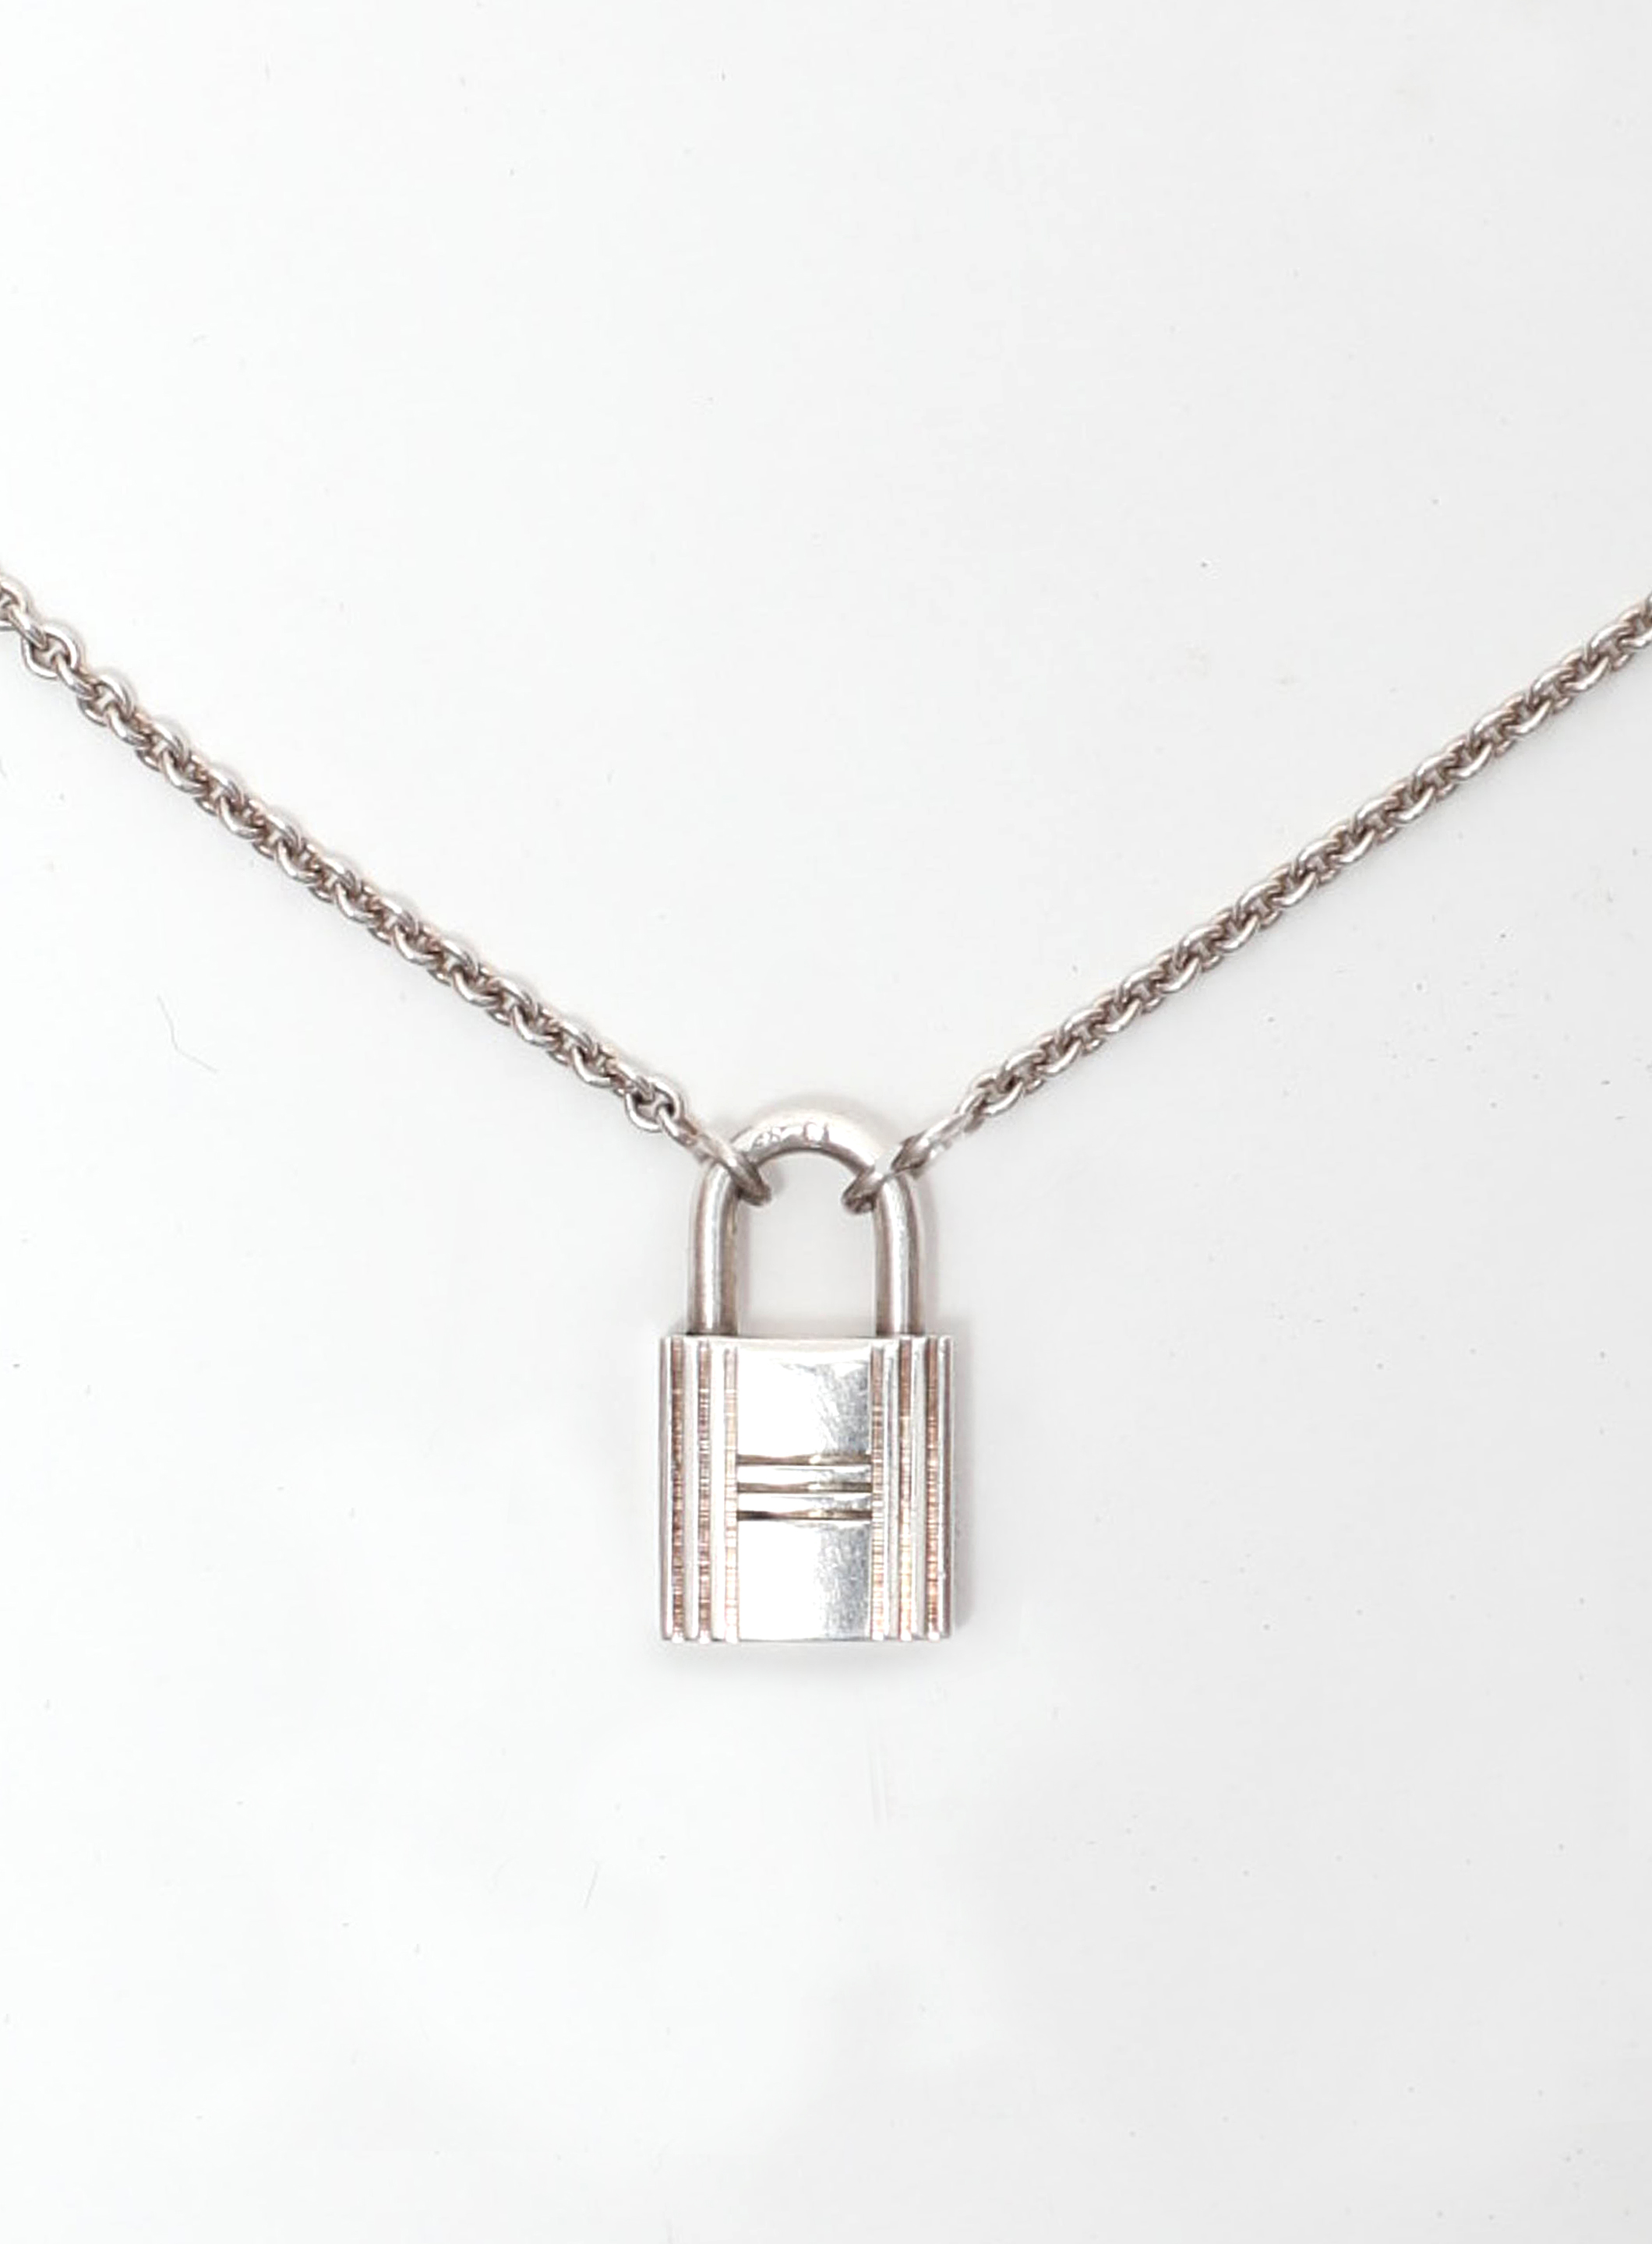 10K White/Rose Gold Ladies Diamond Lock Pendant Necklace 0.3ct 406791